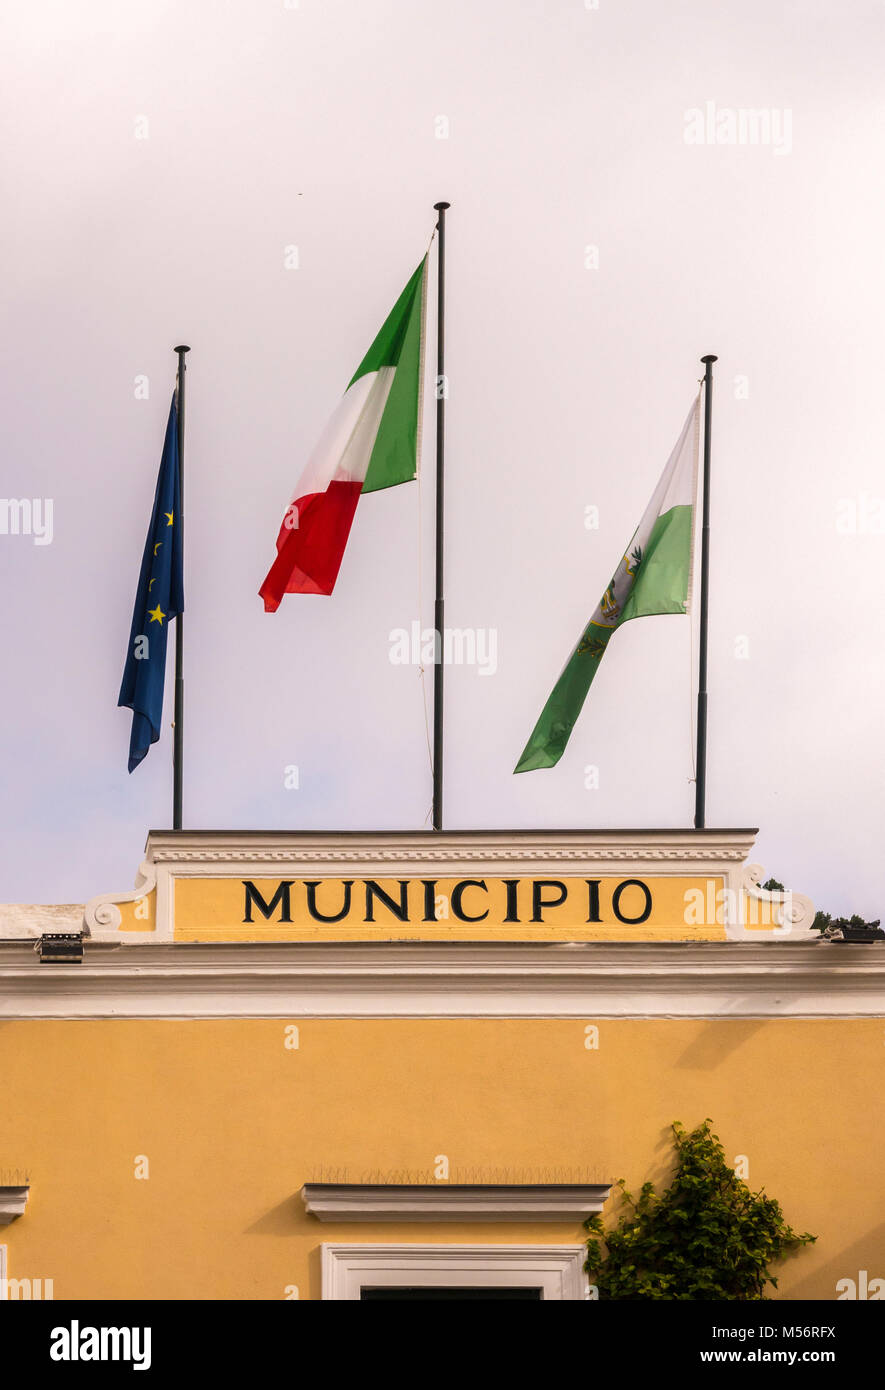 Municipio sign and flags, Piazza Umberto I Capri, Italy. Stock Photo